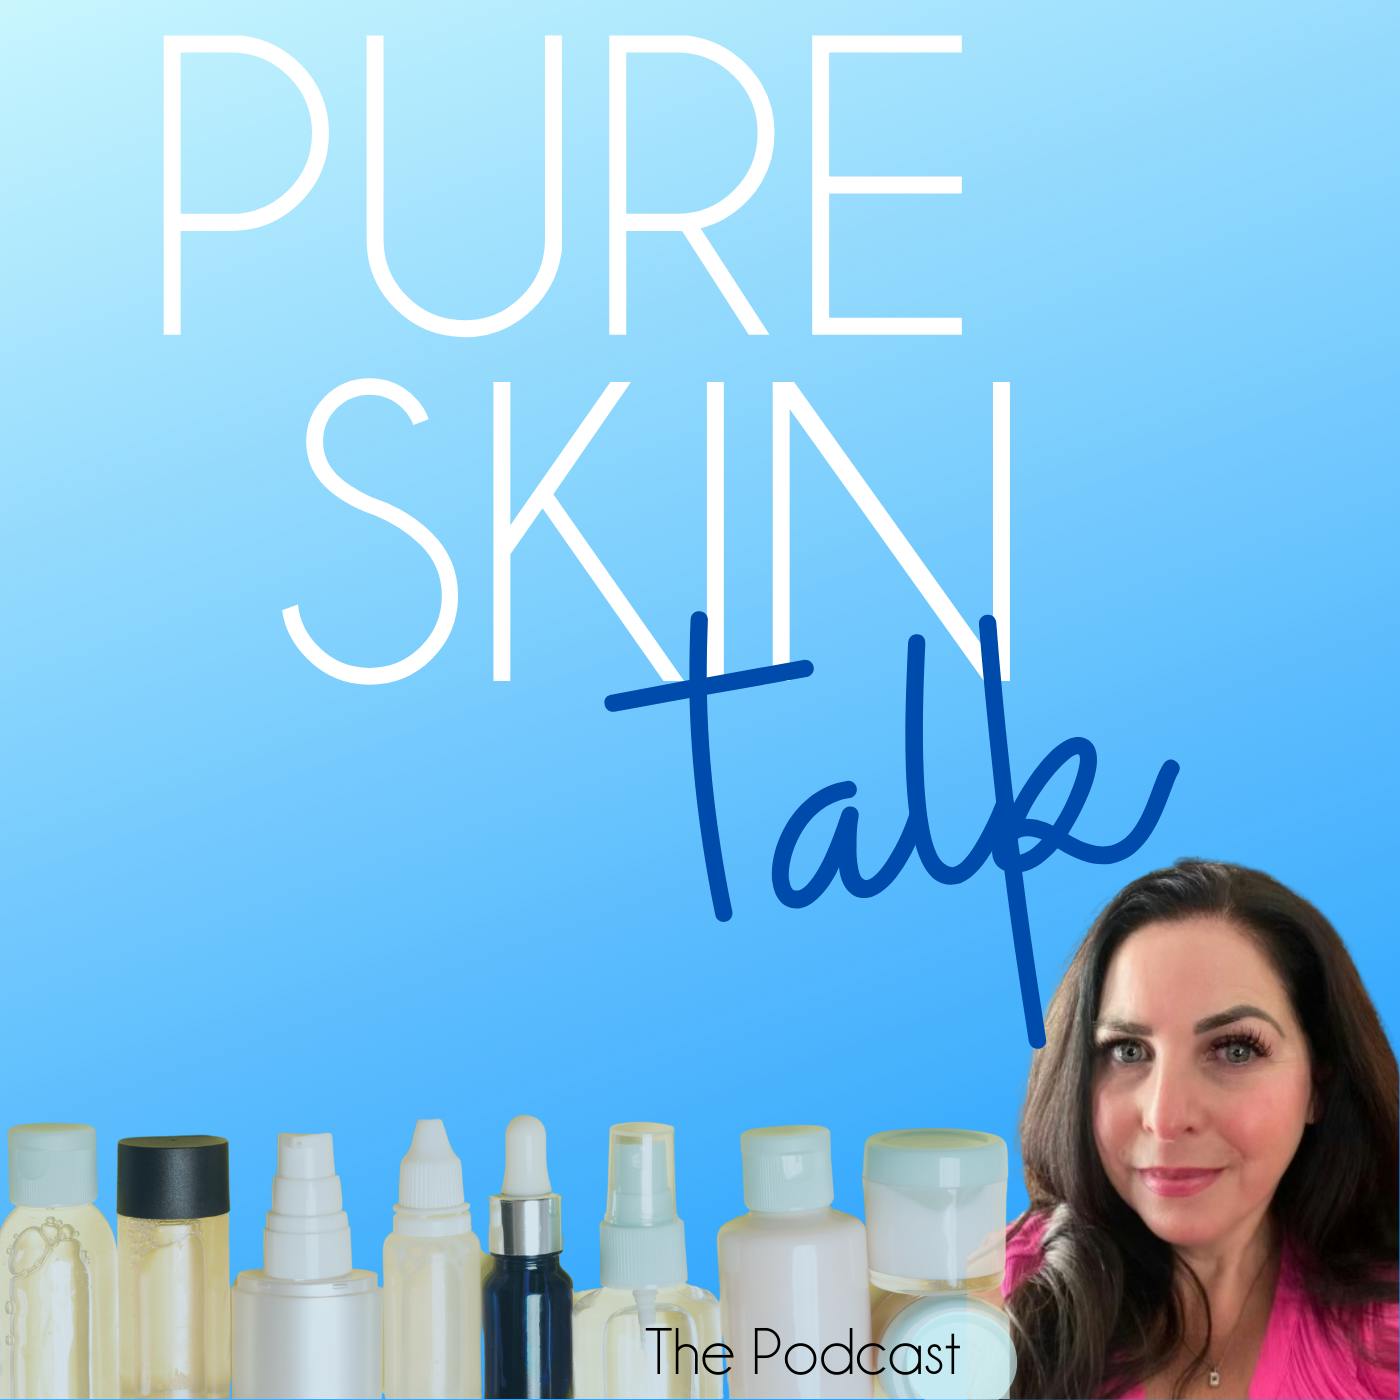 Pure Skin Talk